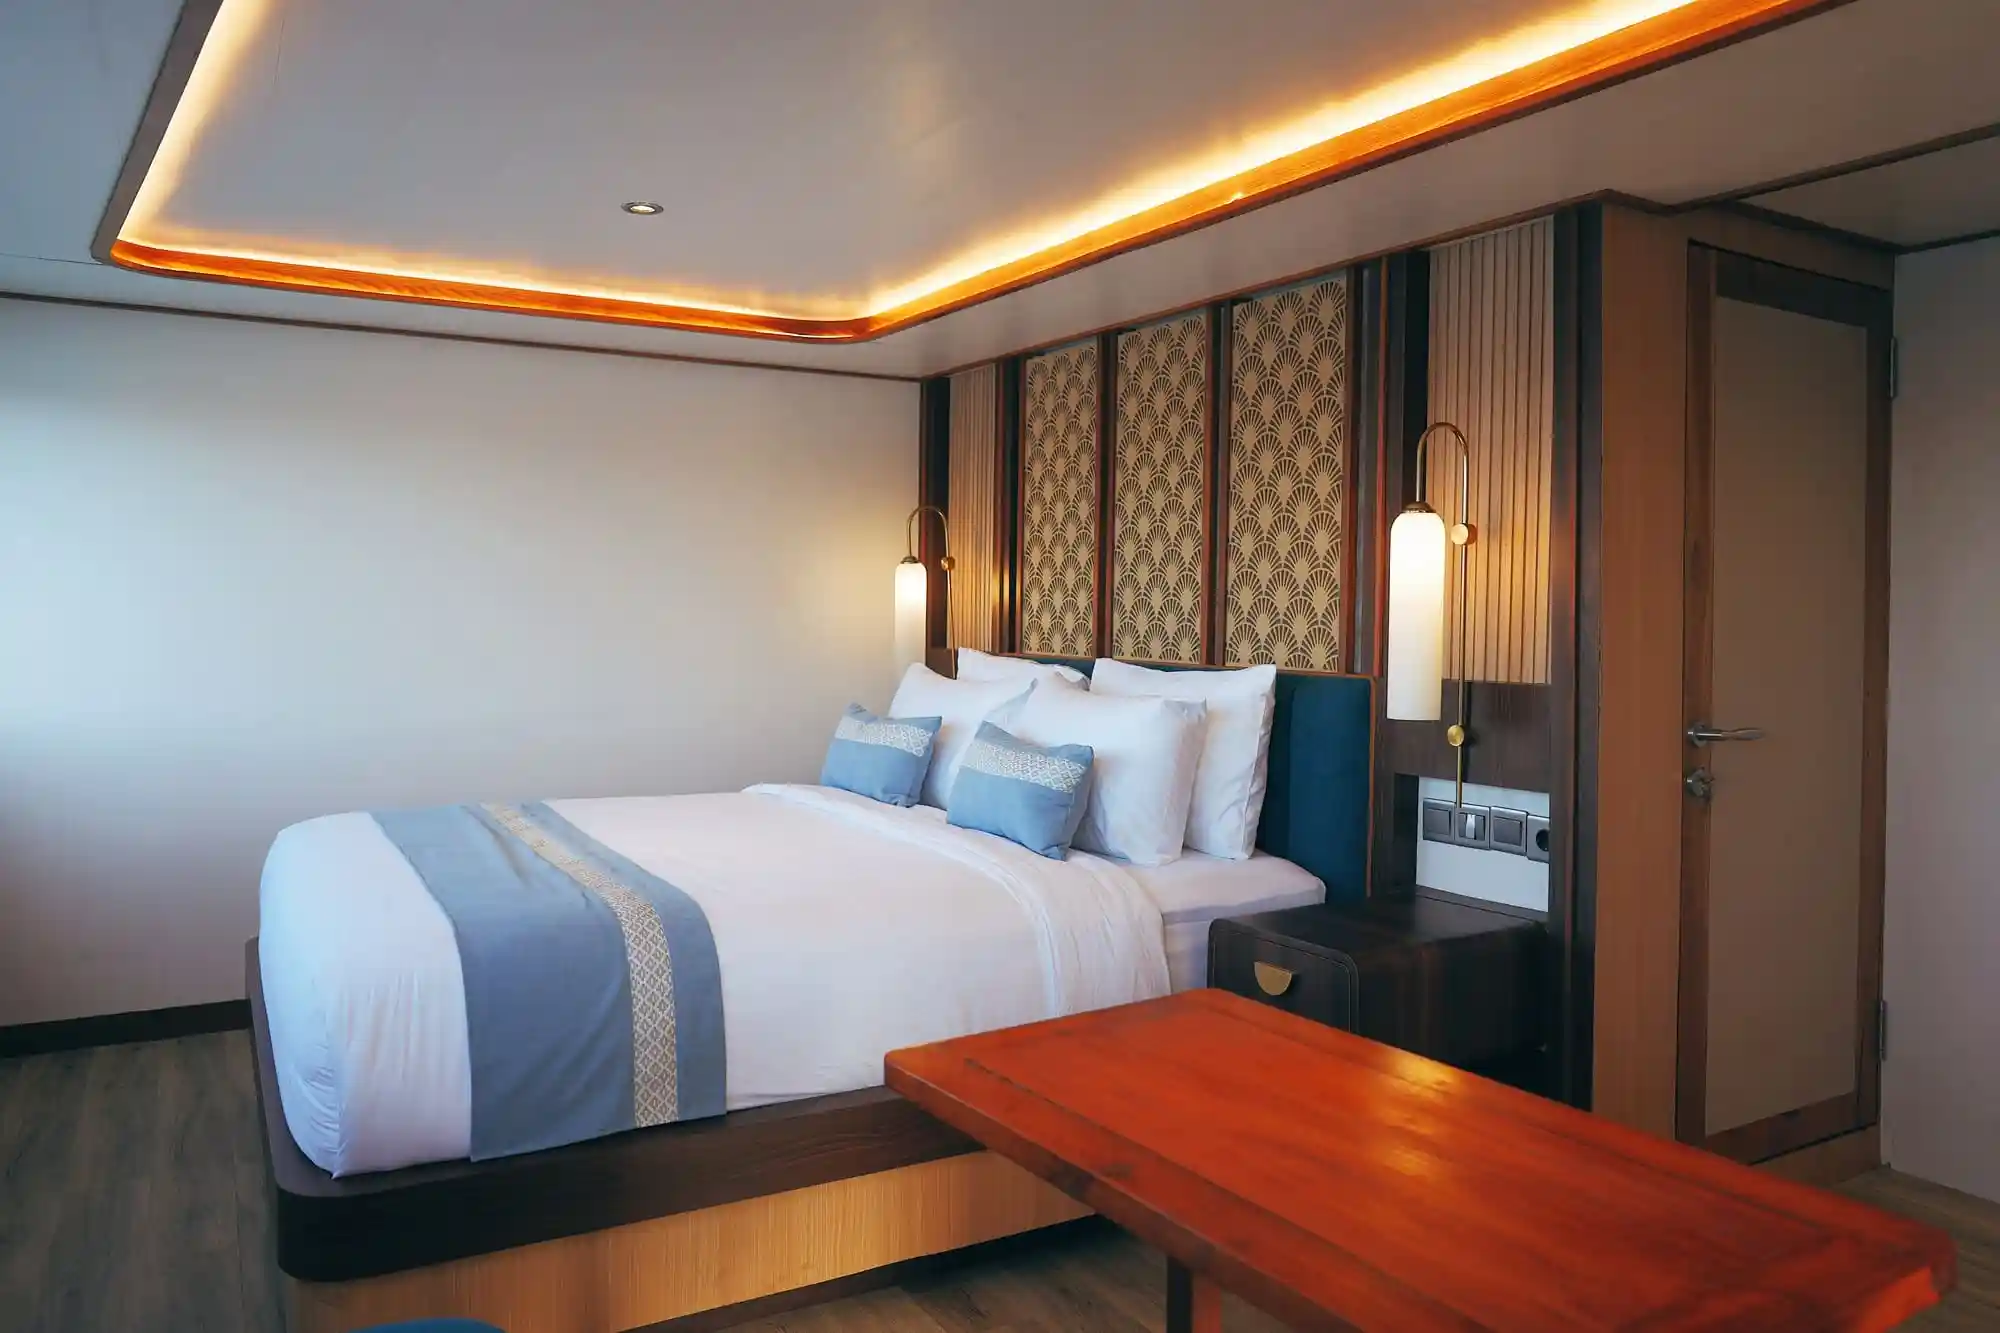 Nayara phinisi cruise bedroom